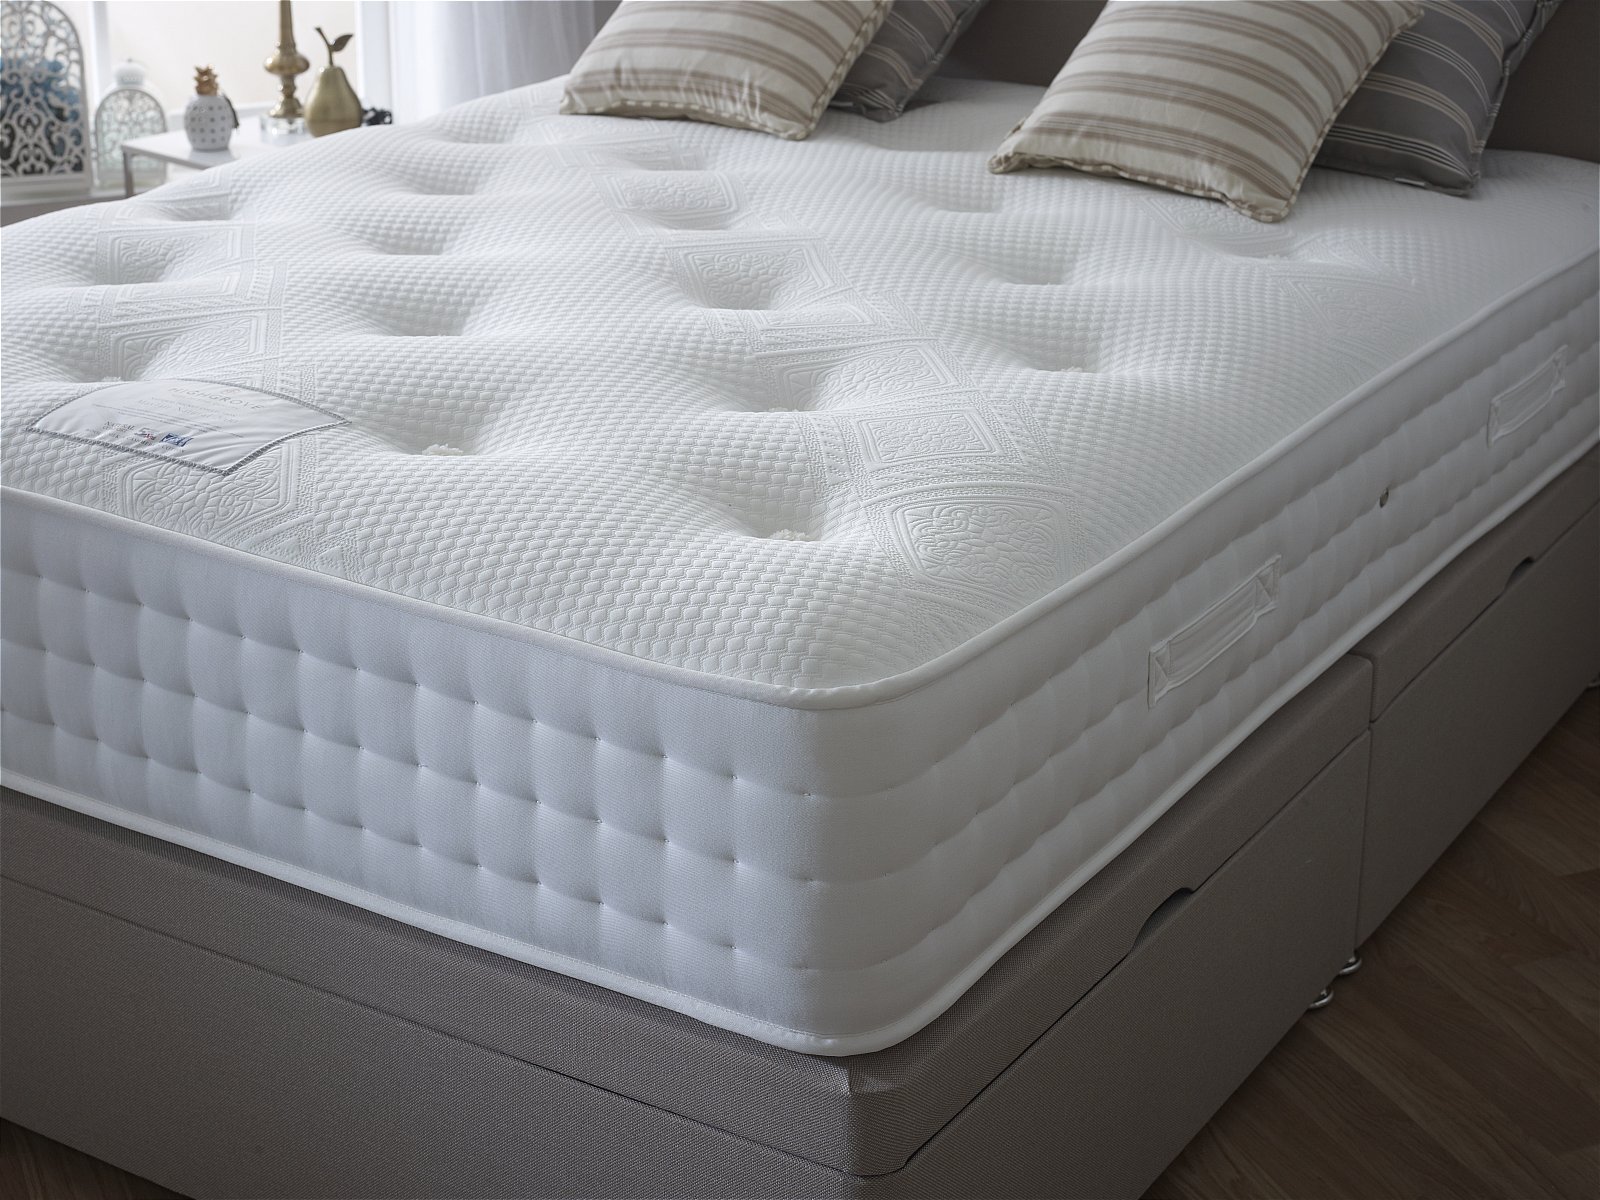 highgrove onyx mattress reviews